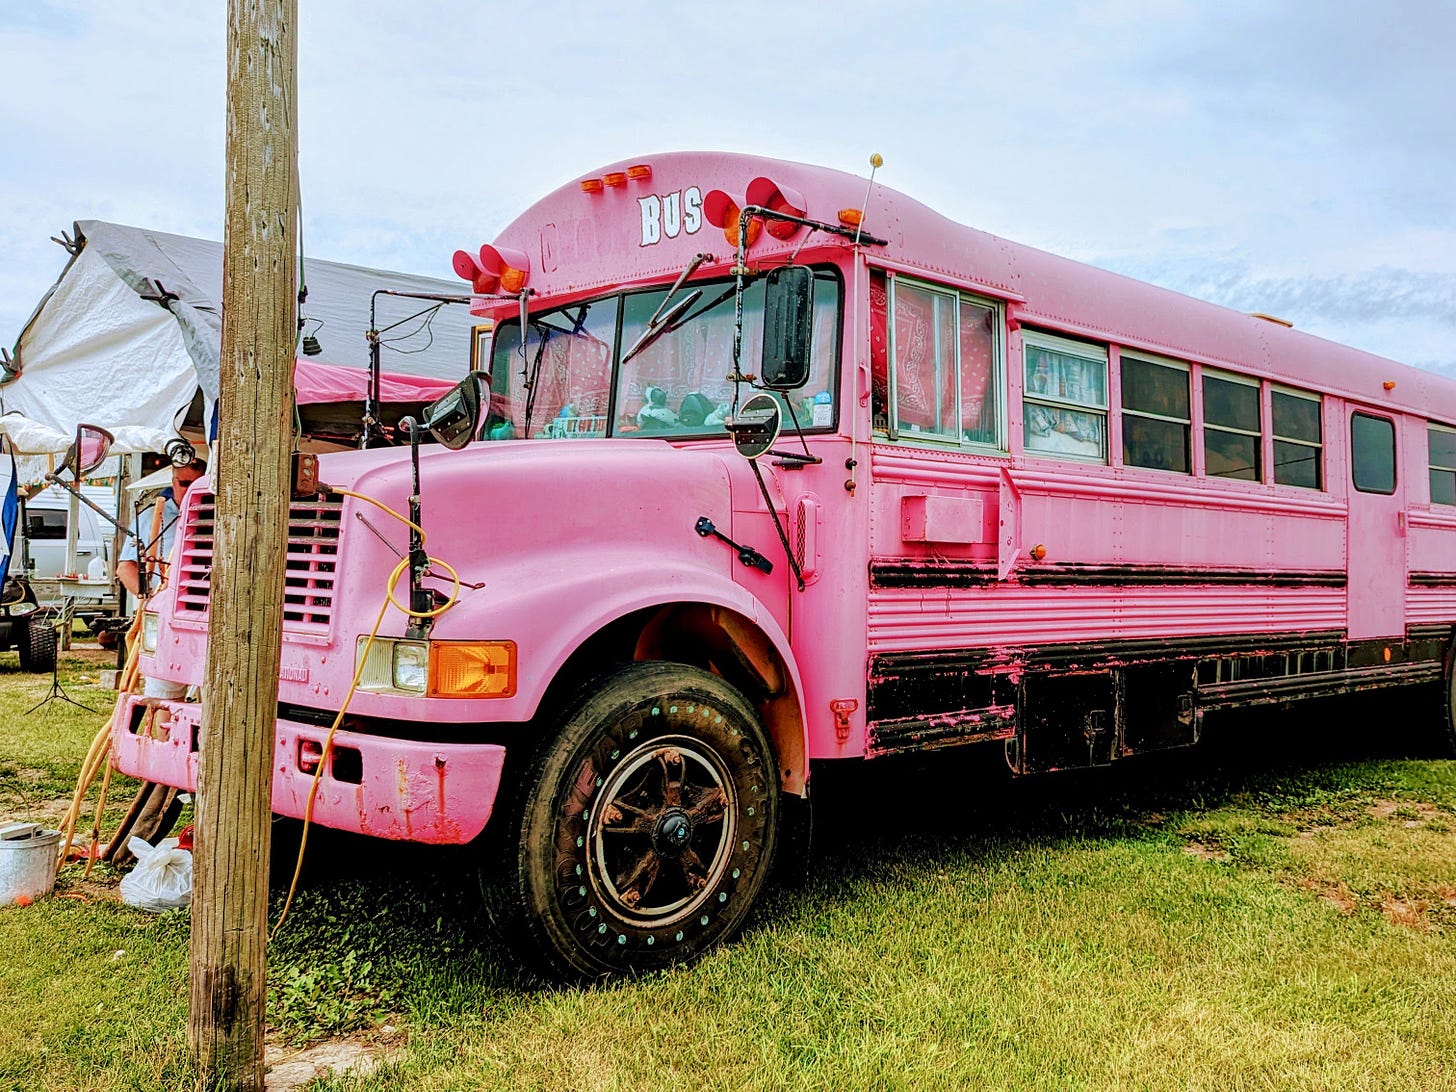 A school bus painted barbie-pink